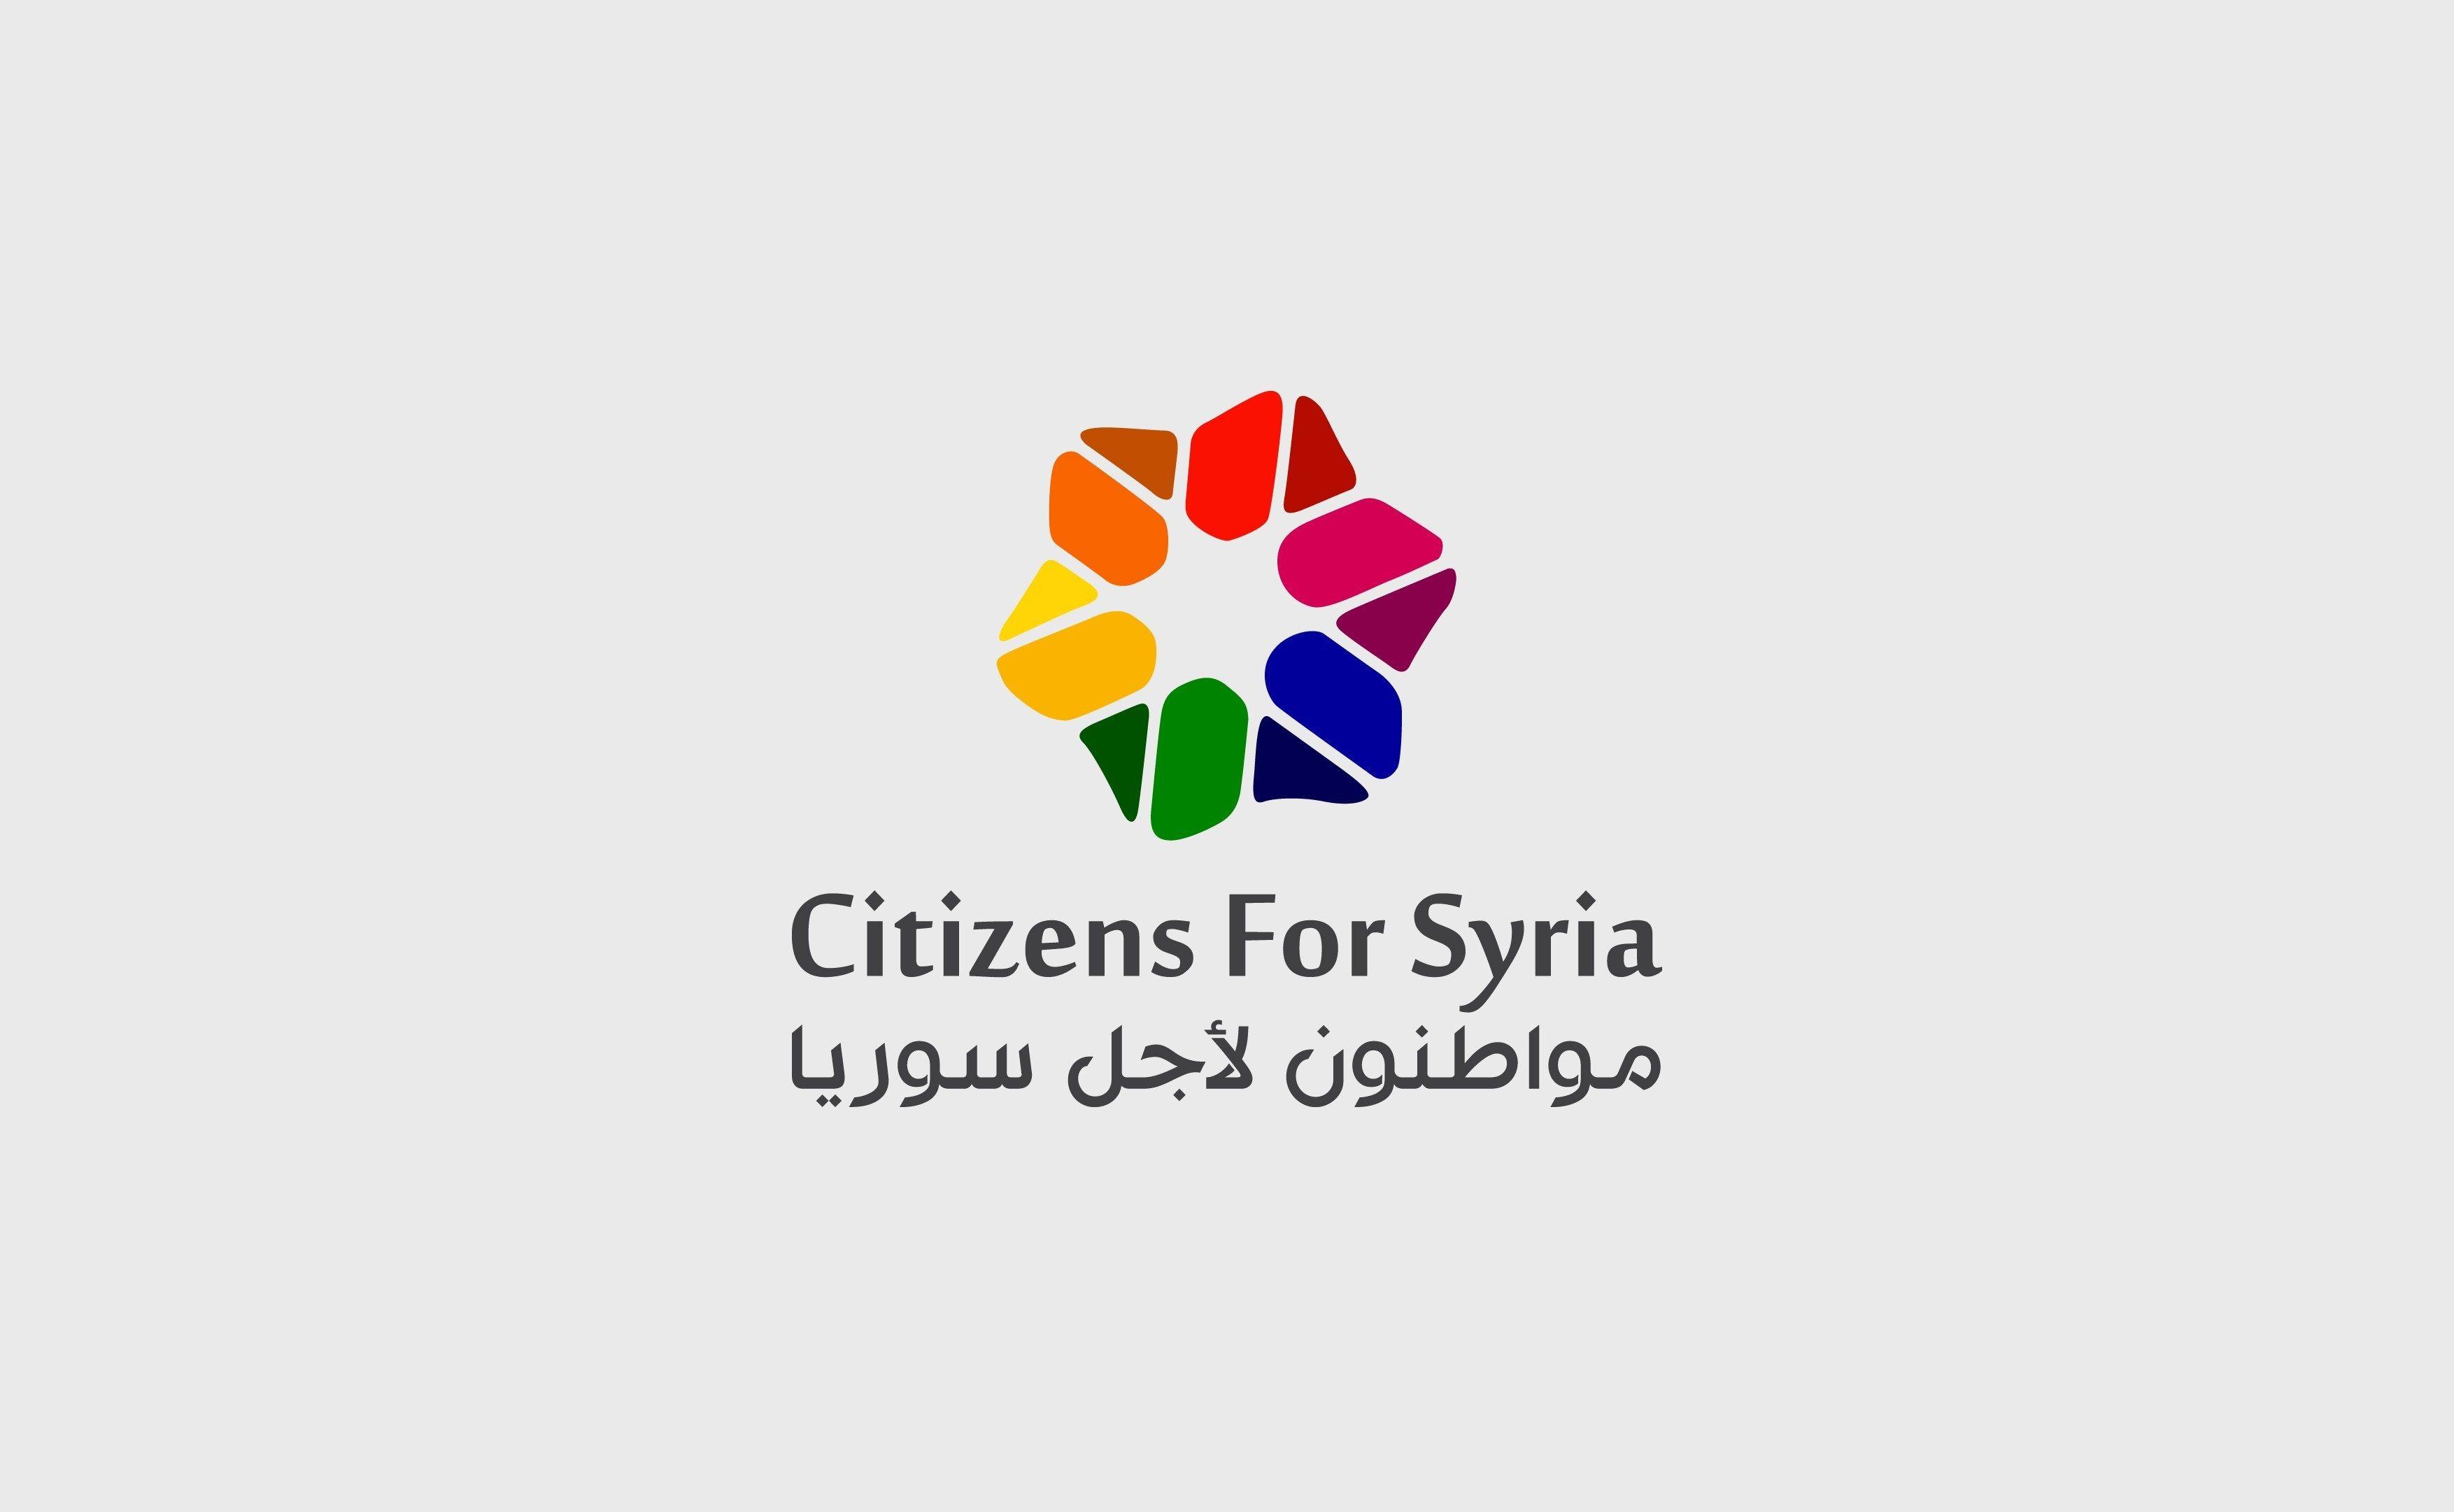 Syria Logo - Tammam. Citizens for Syria visual identity